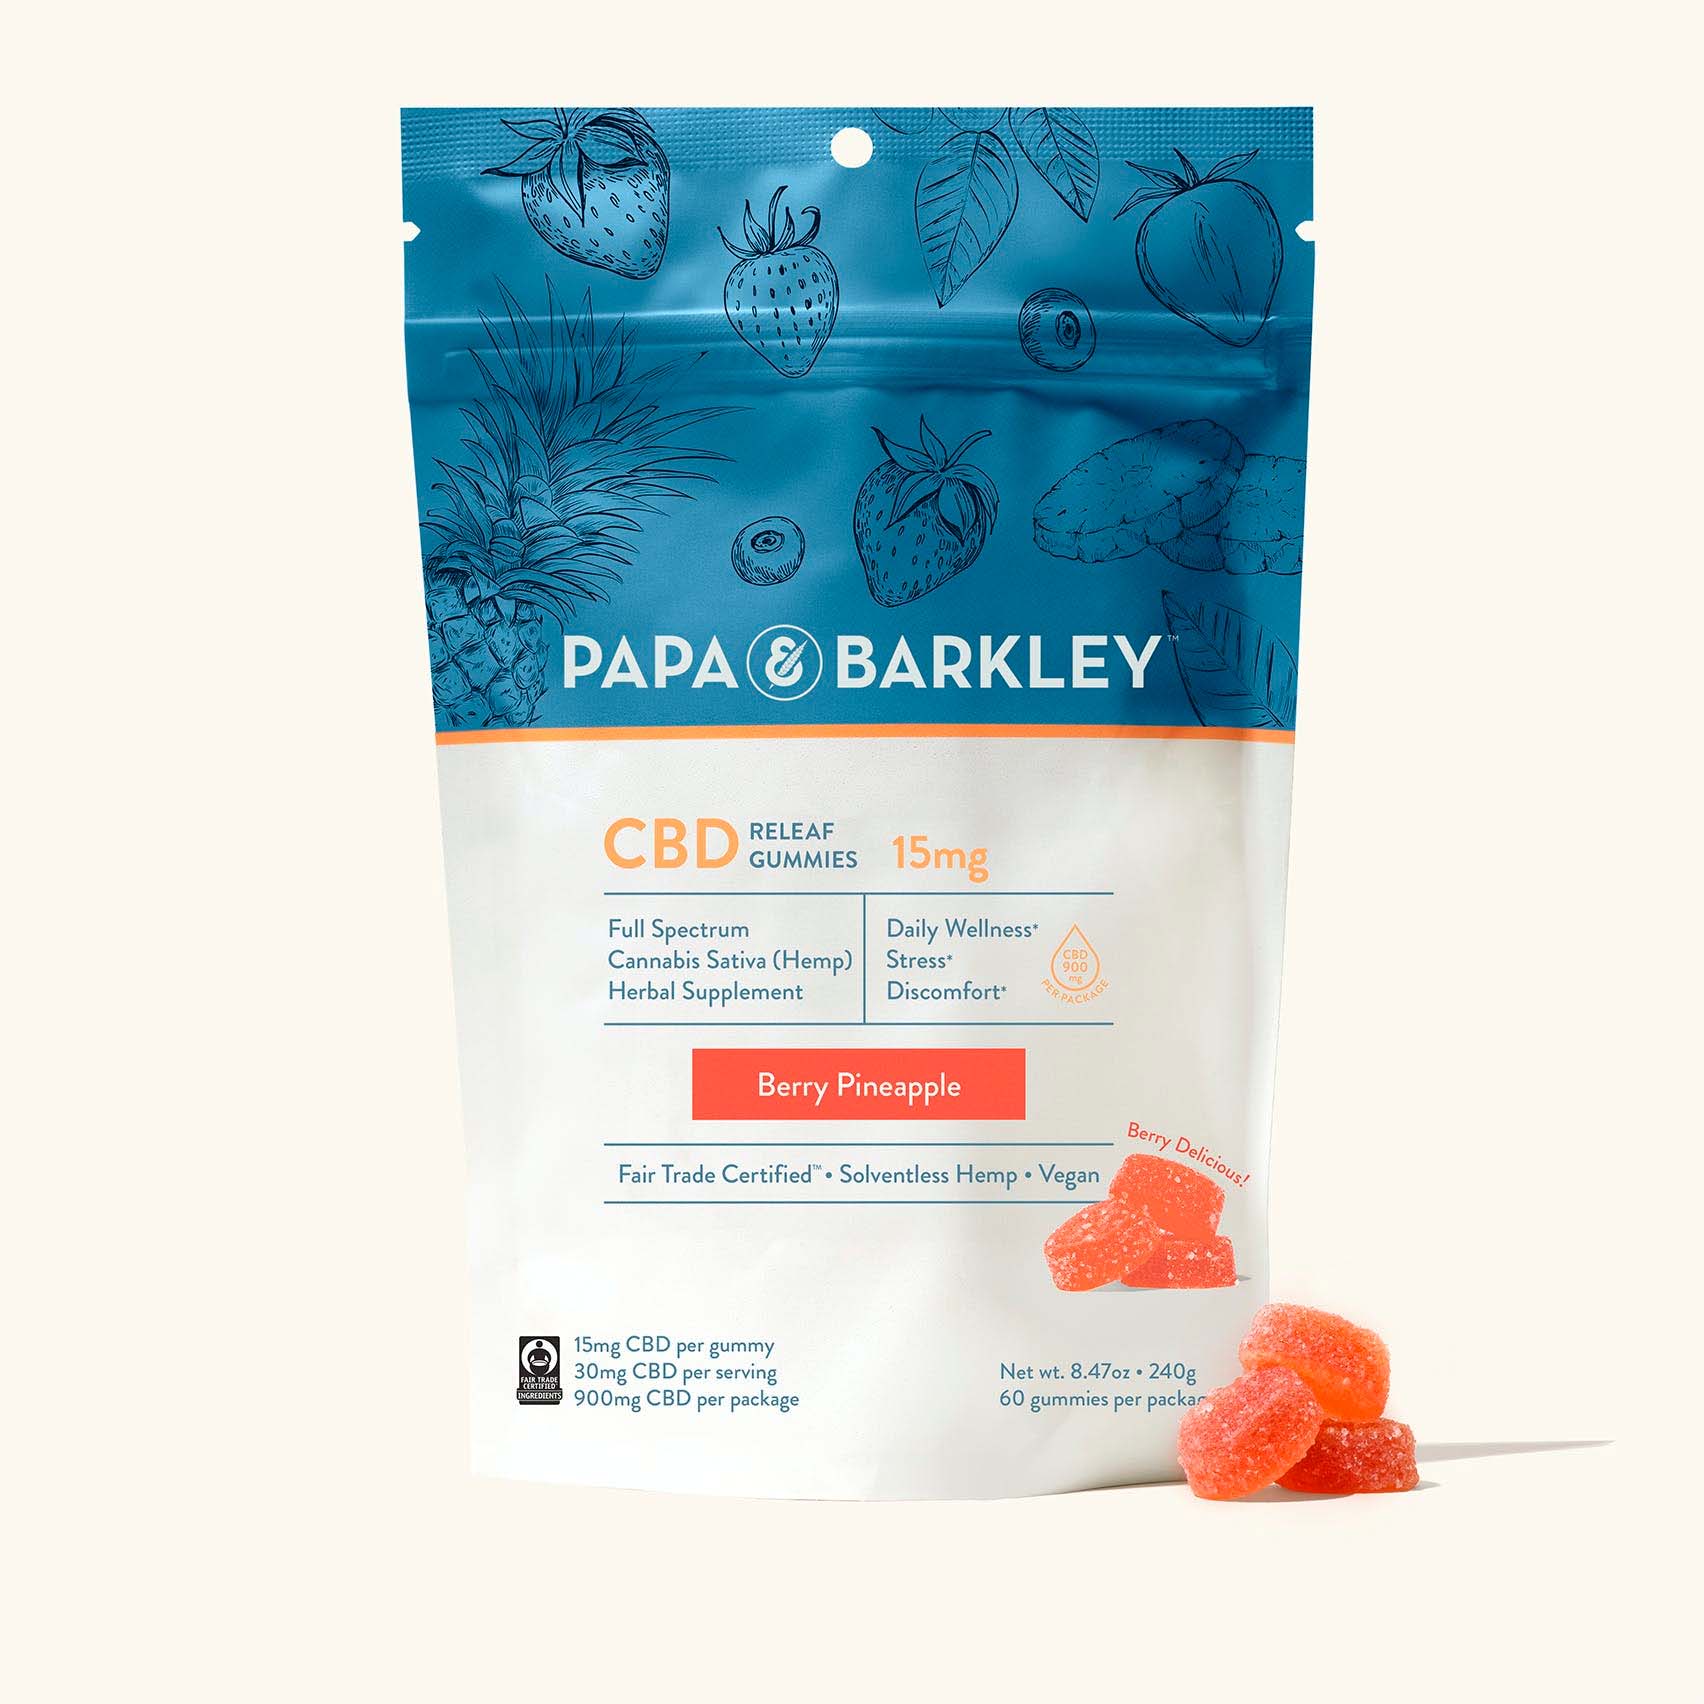 Papa & Barkley, CBD Releaf Gummies, Berry Pineapple, Full Spectrum, 60ct, 900mg CBD